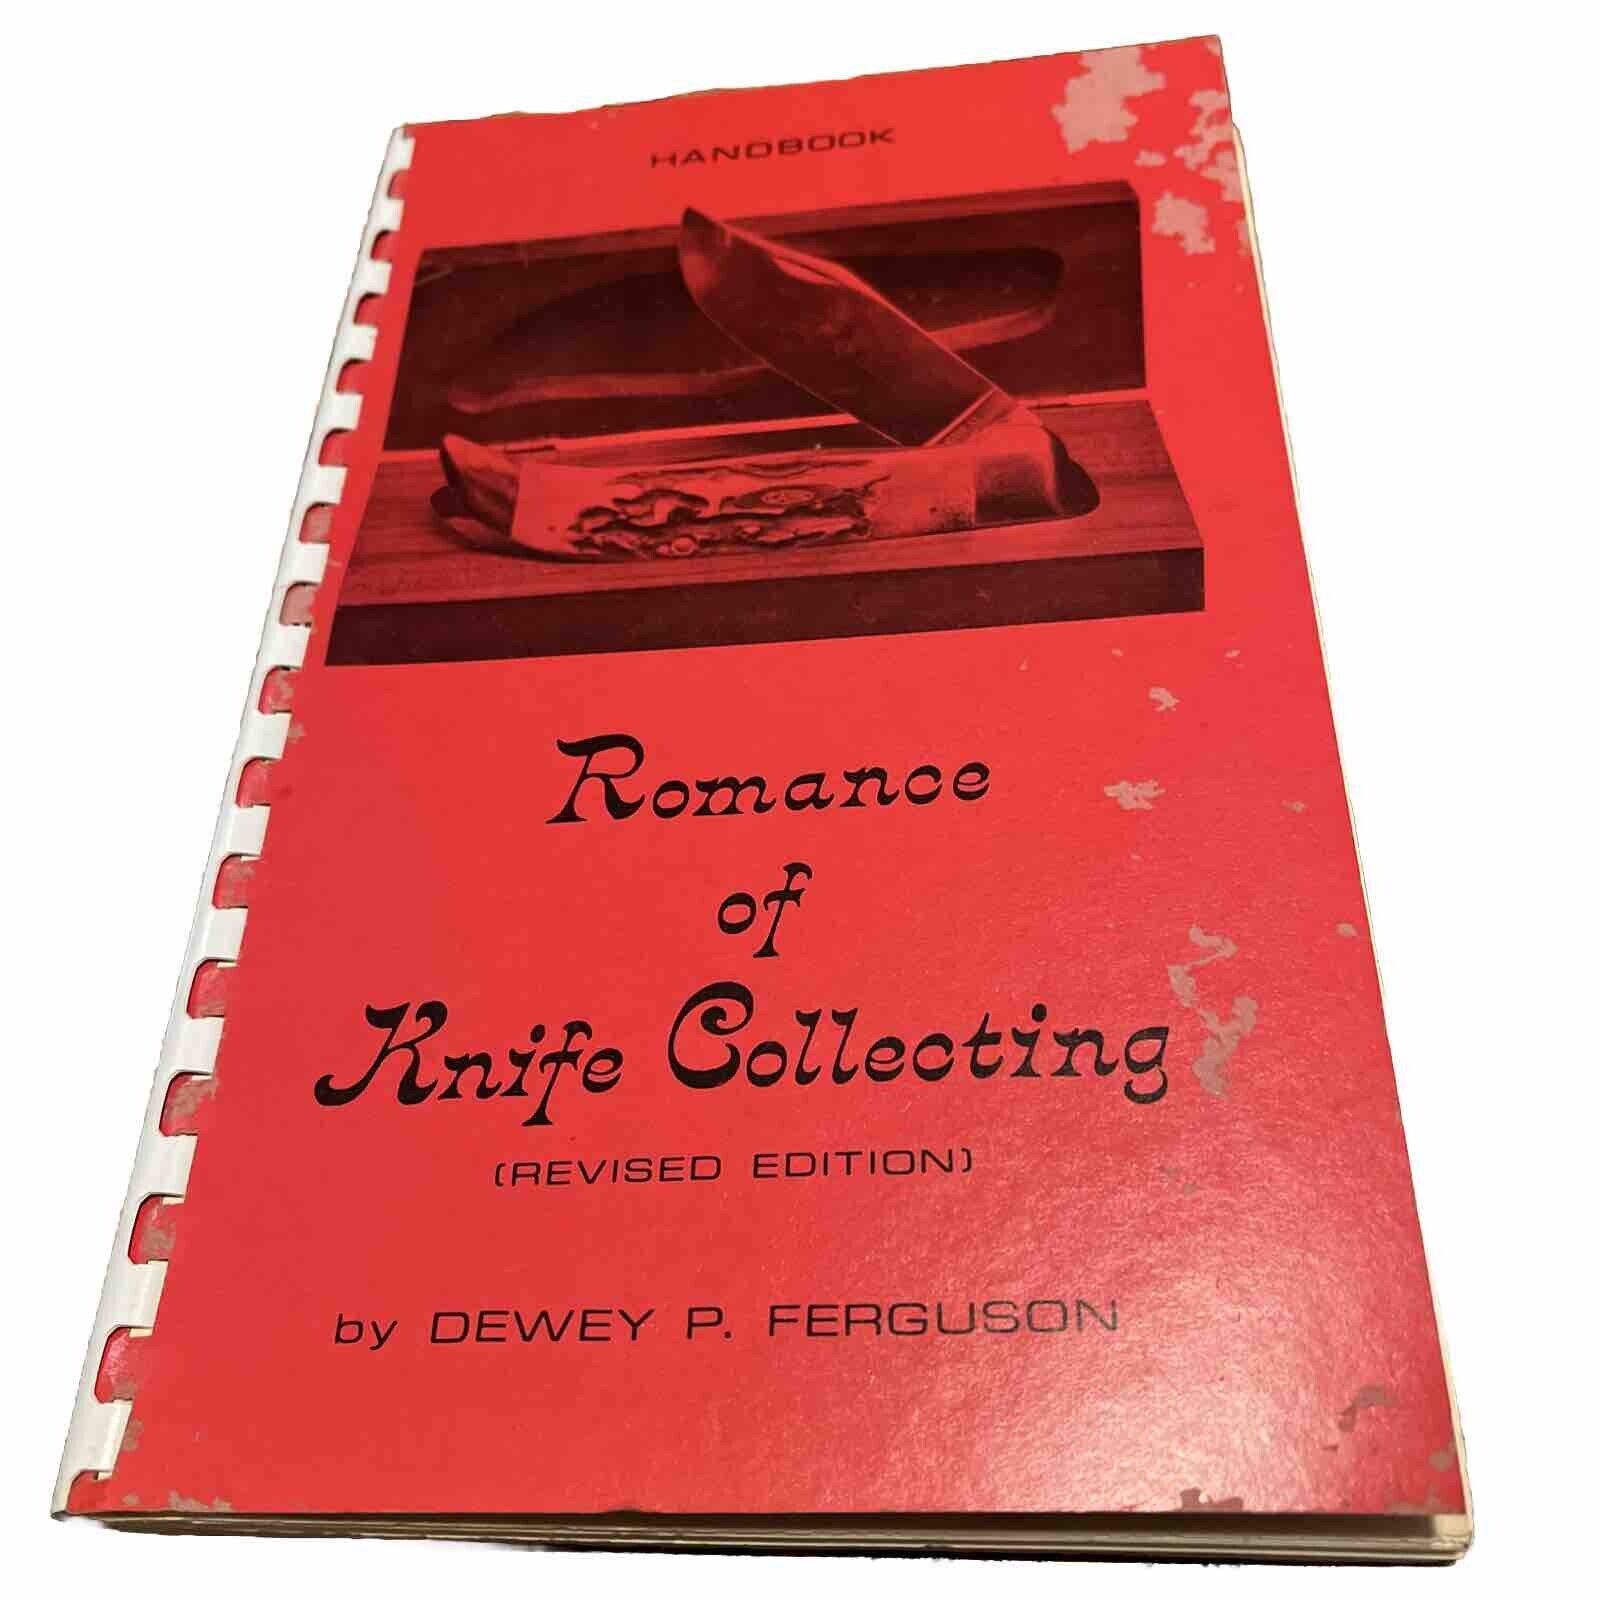 Romance of Knife Collecting Handbook Dewey P. Ferguson 1970 (Revised) Knives